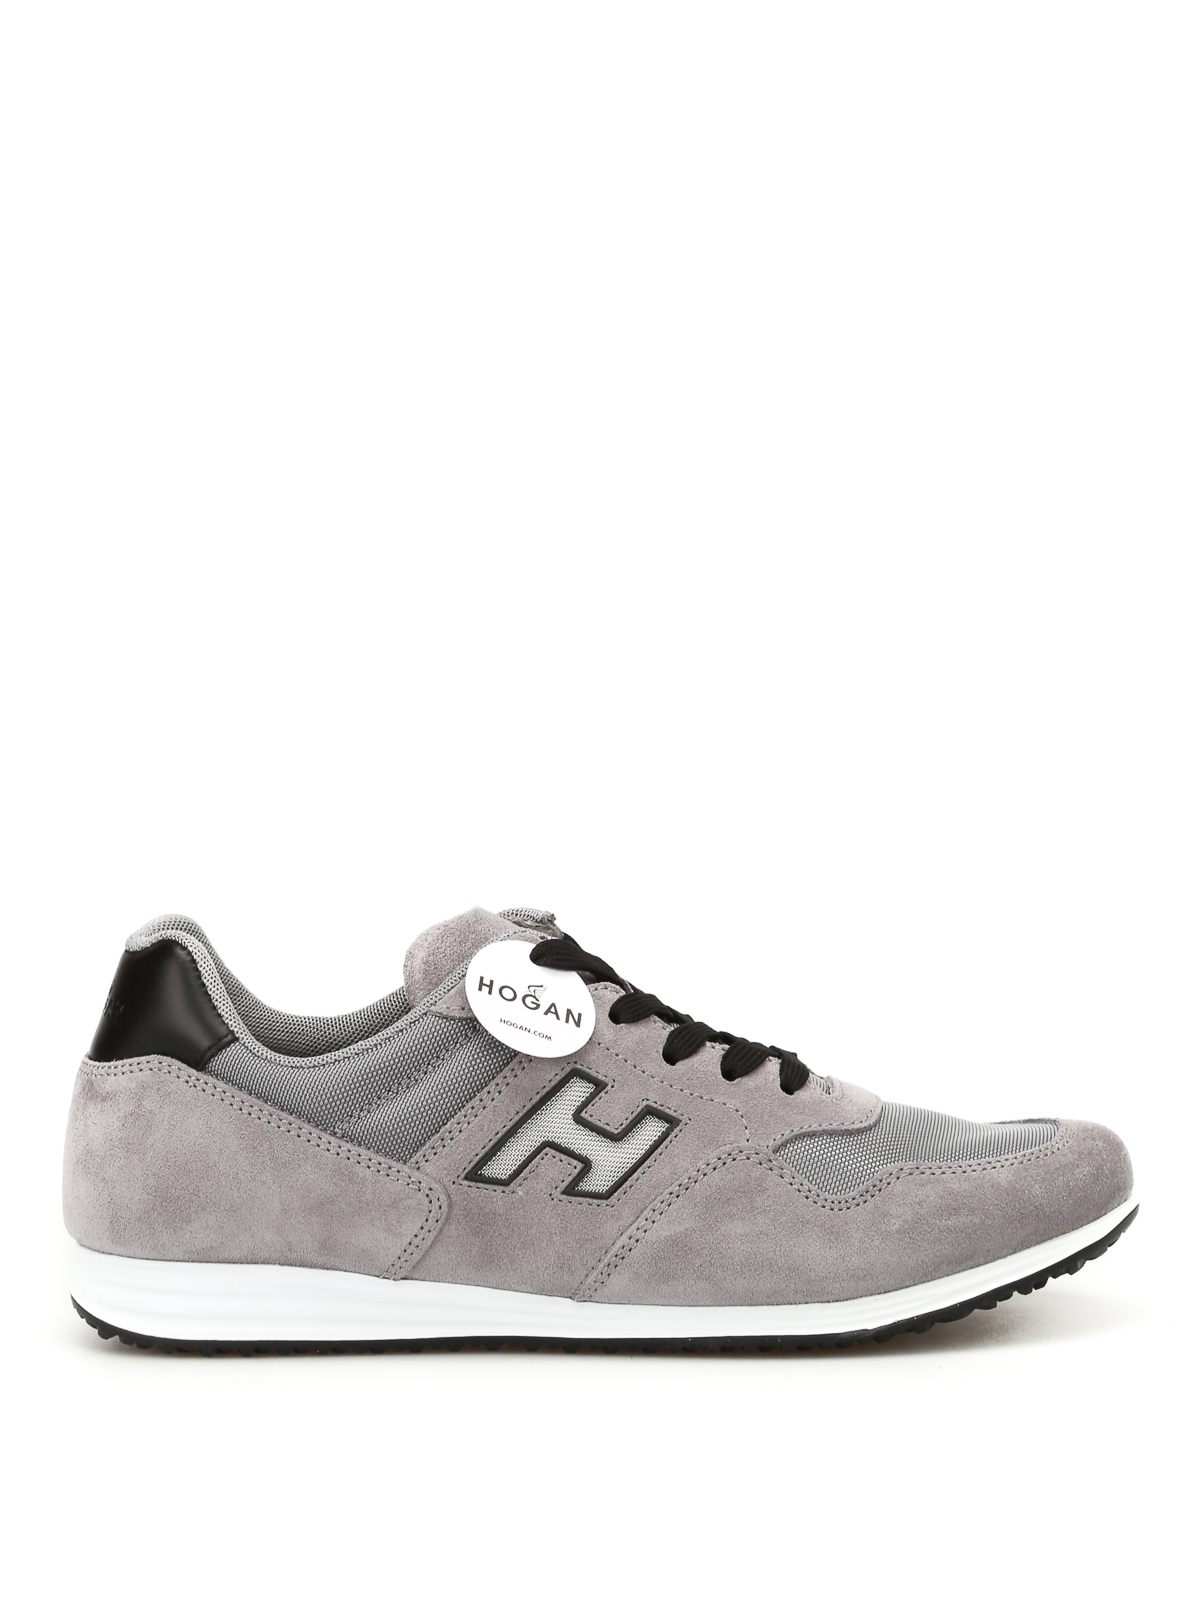 Trainers Hogan - Olympia H205 grey sneakers - HXM2050X603I7N813K